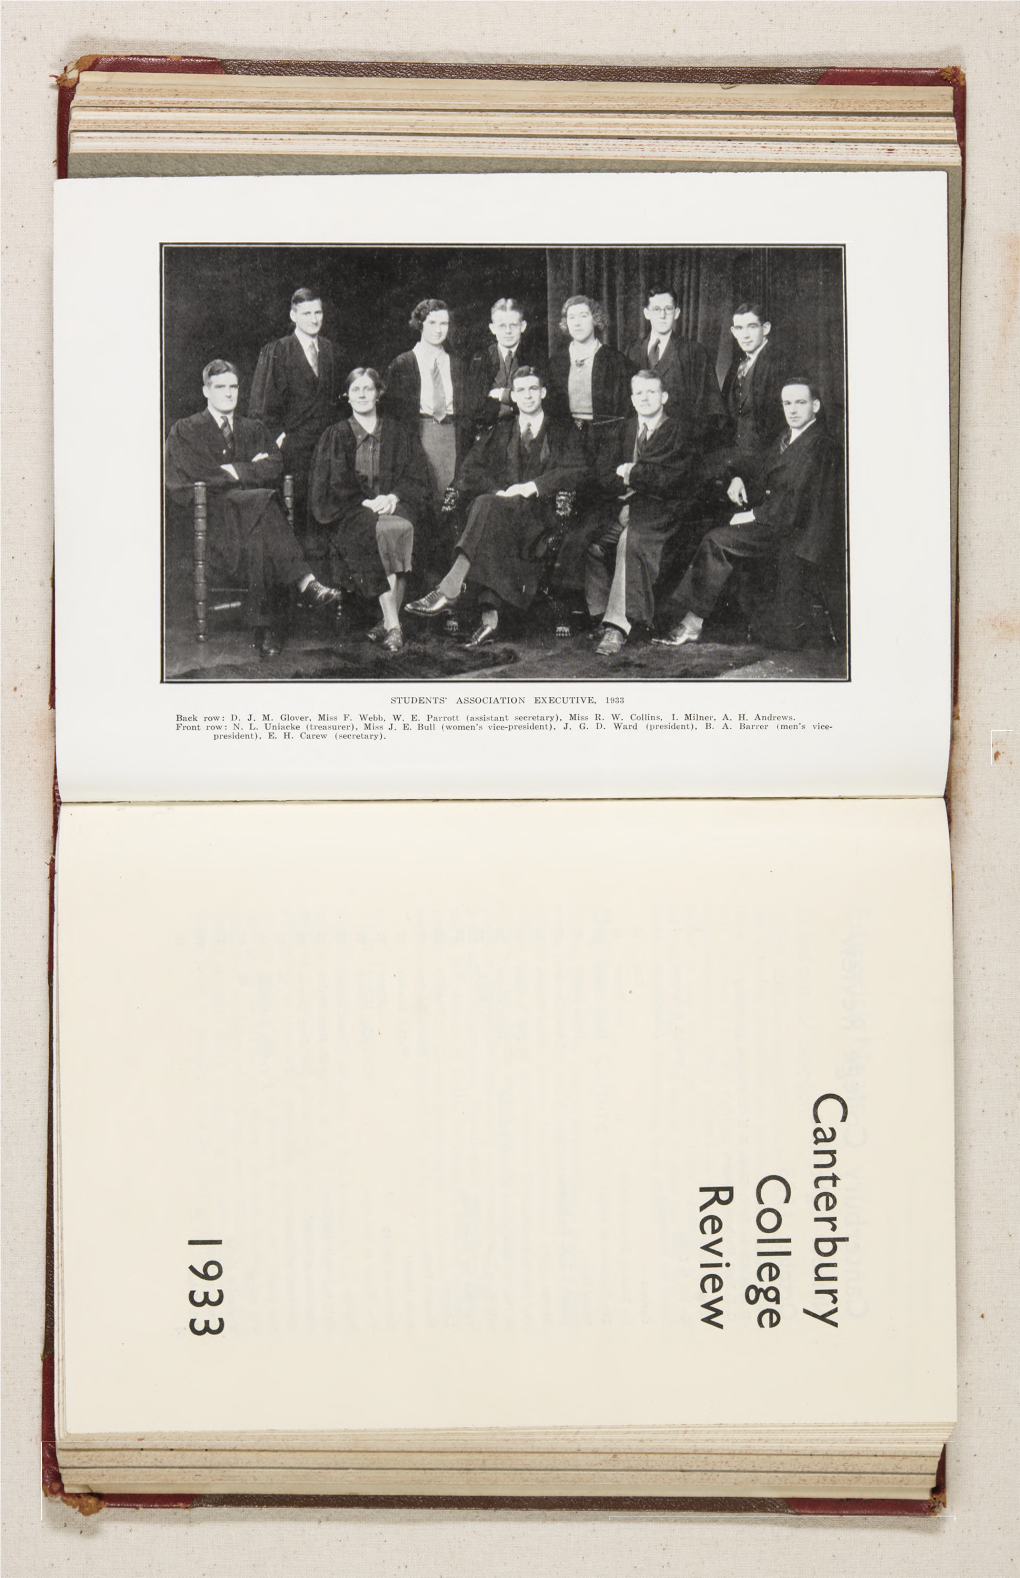 Fd O - ! S STUDENTS' ASSOCIATION EXECUTIVE, 1933